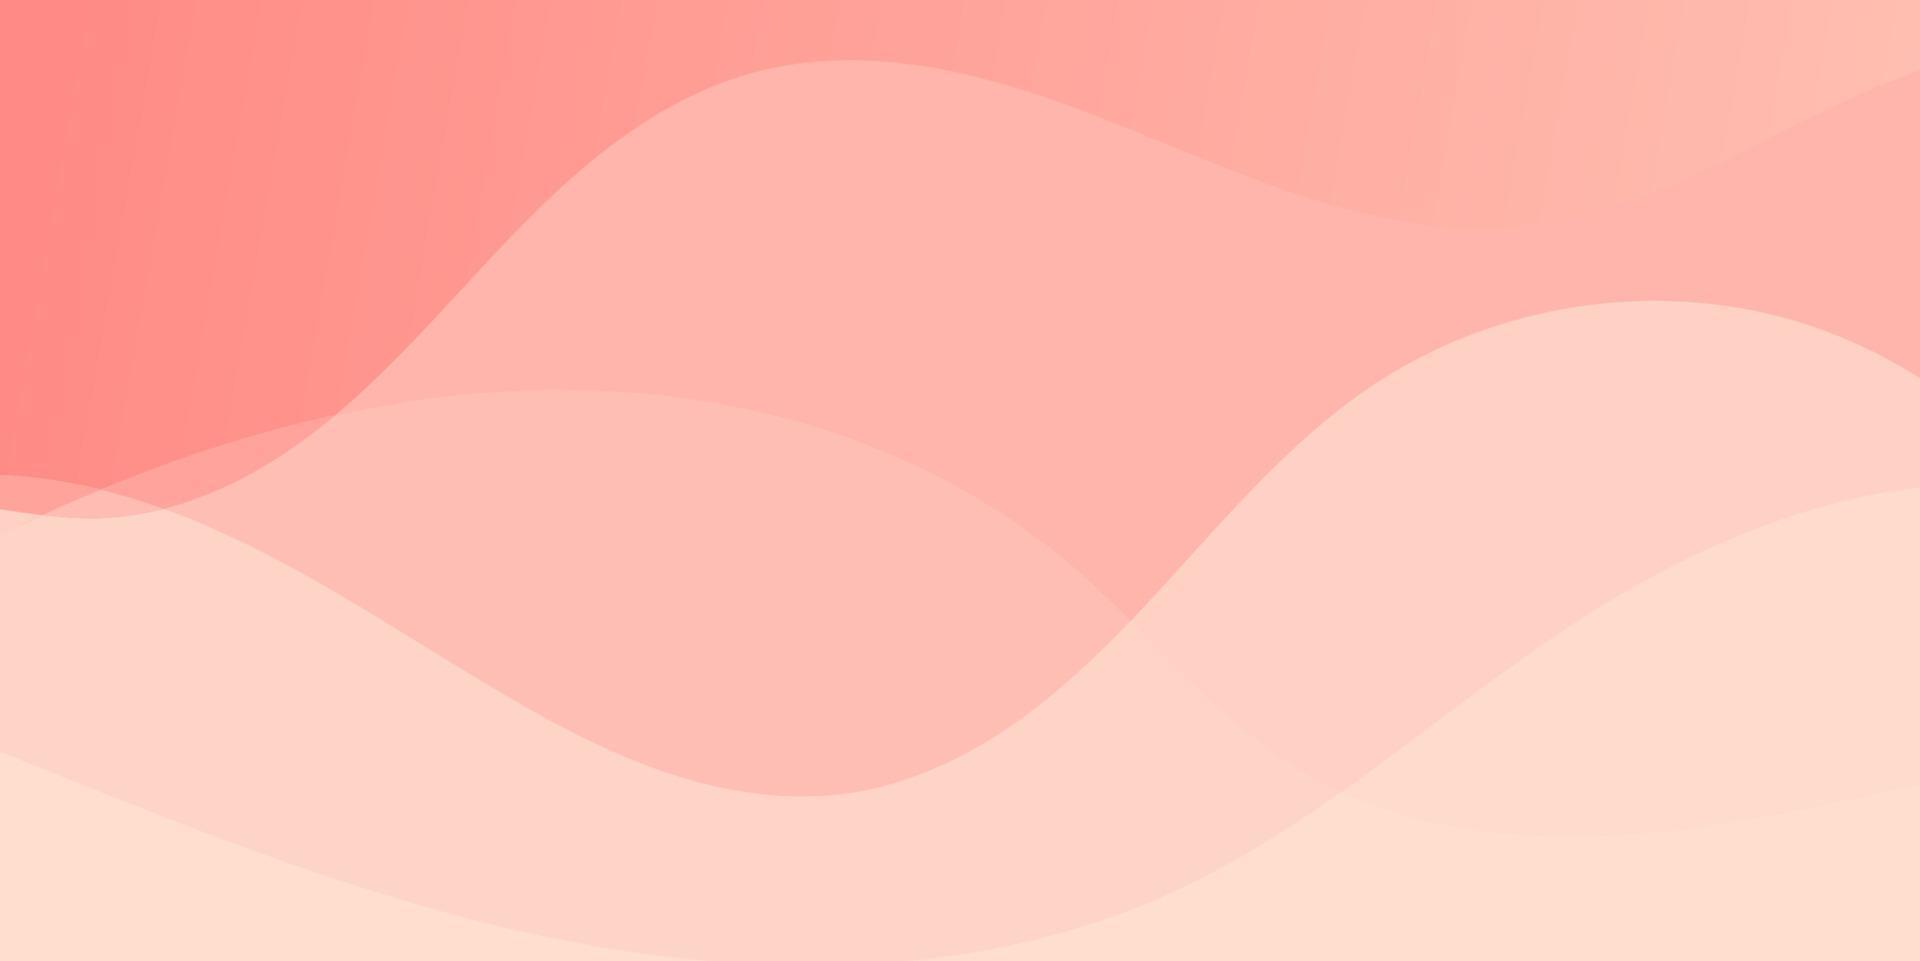 pink wavy background vector